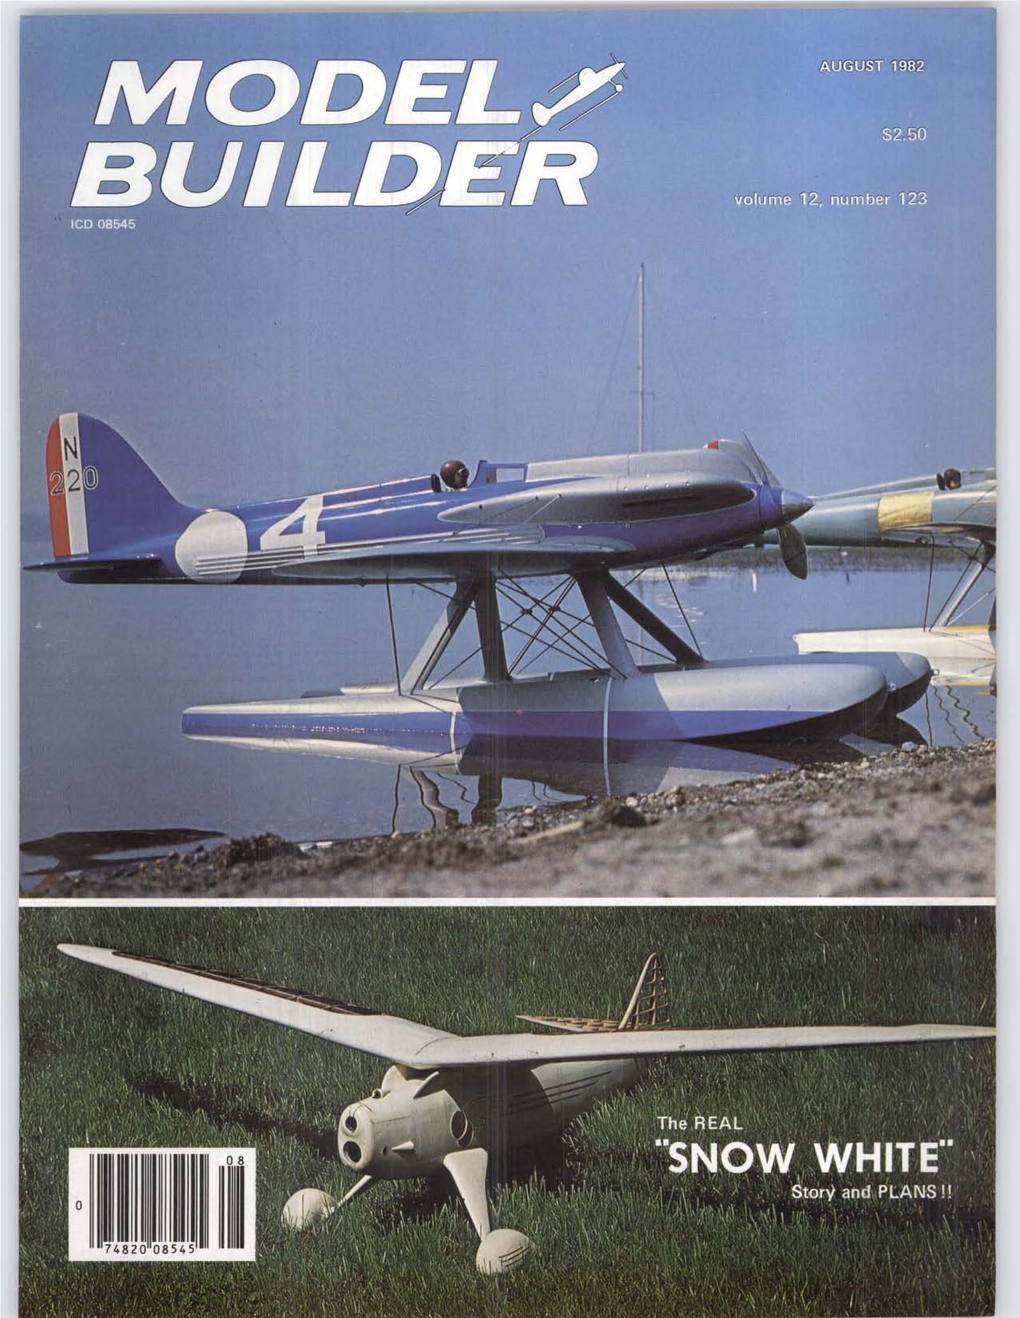 MODEL BUILDER AUGUST 1982 FULL SIZE PLANS AV AILABLE - SEE PAGE 100 21 Fu Taba